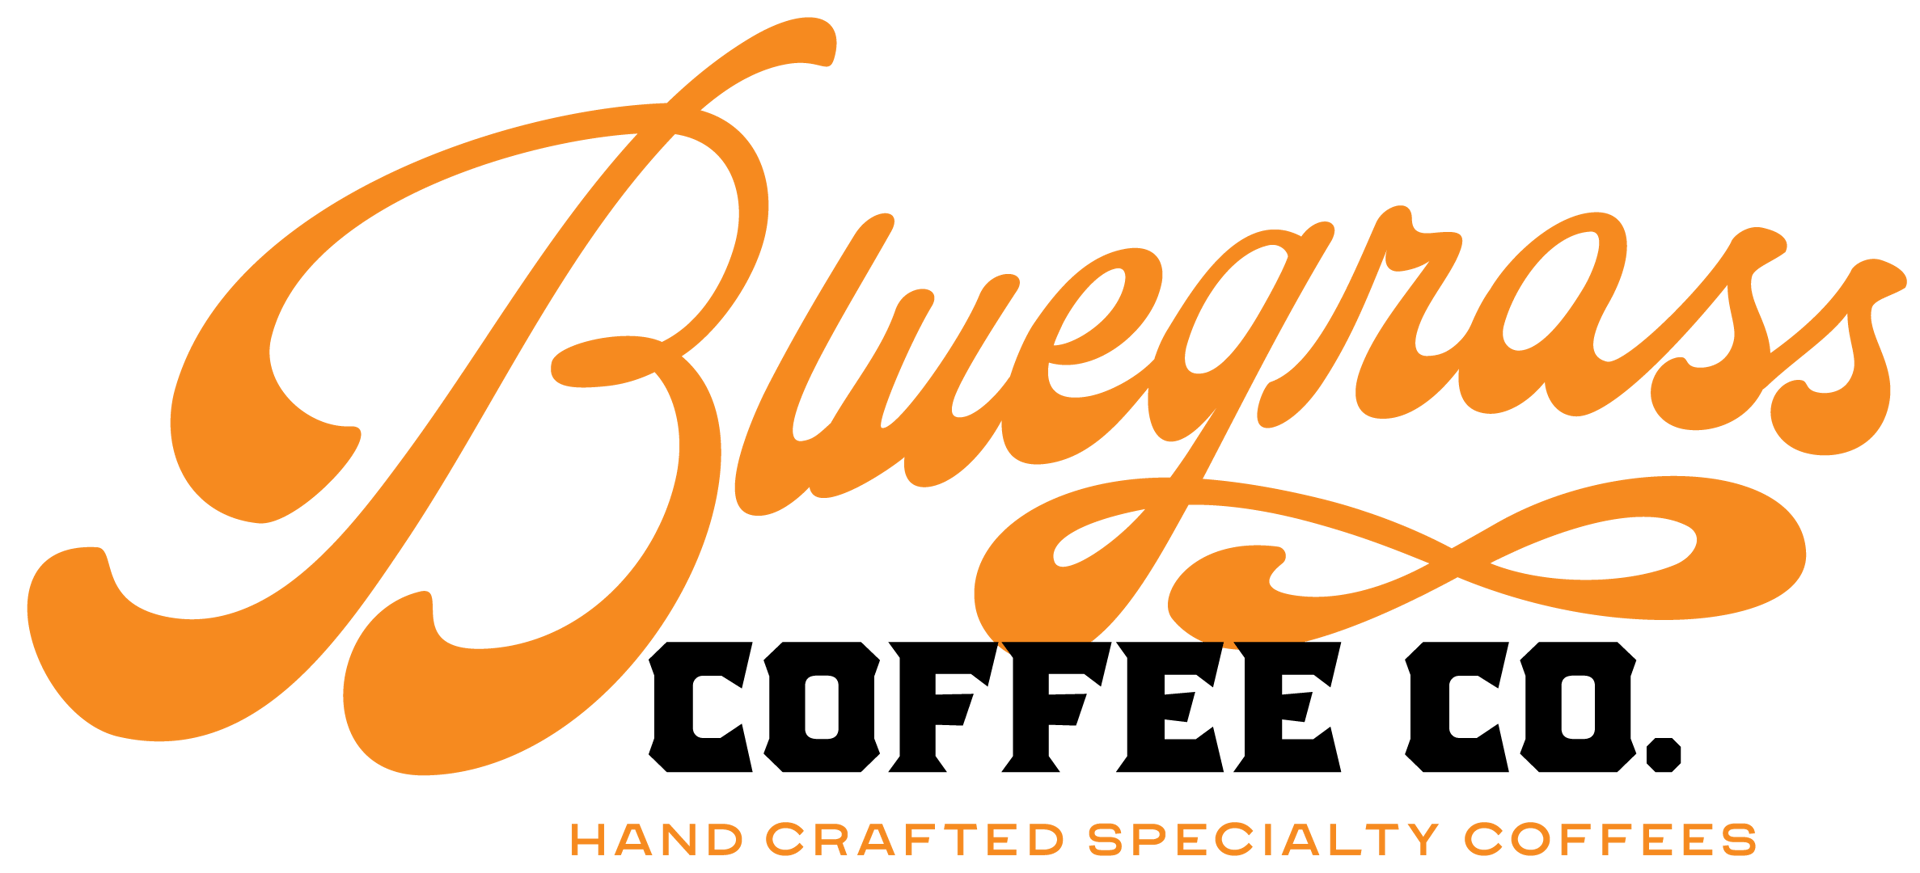 Bluegrass Coffee Co. Logo